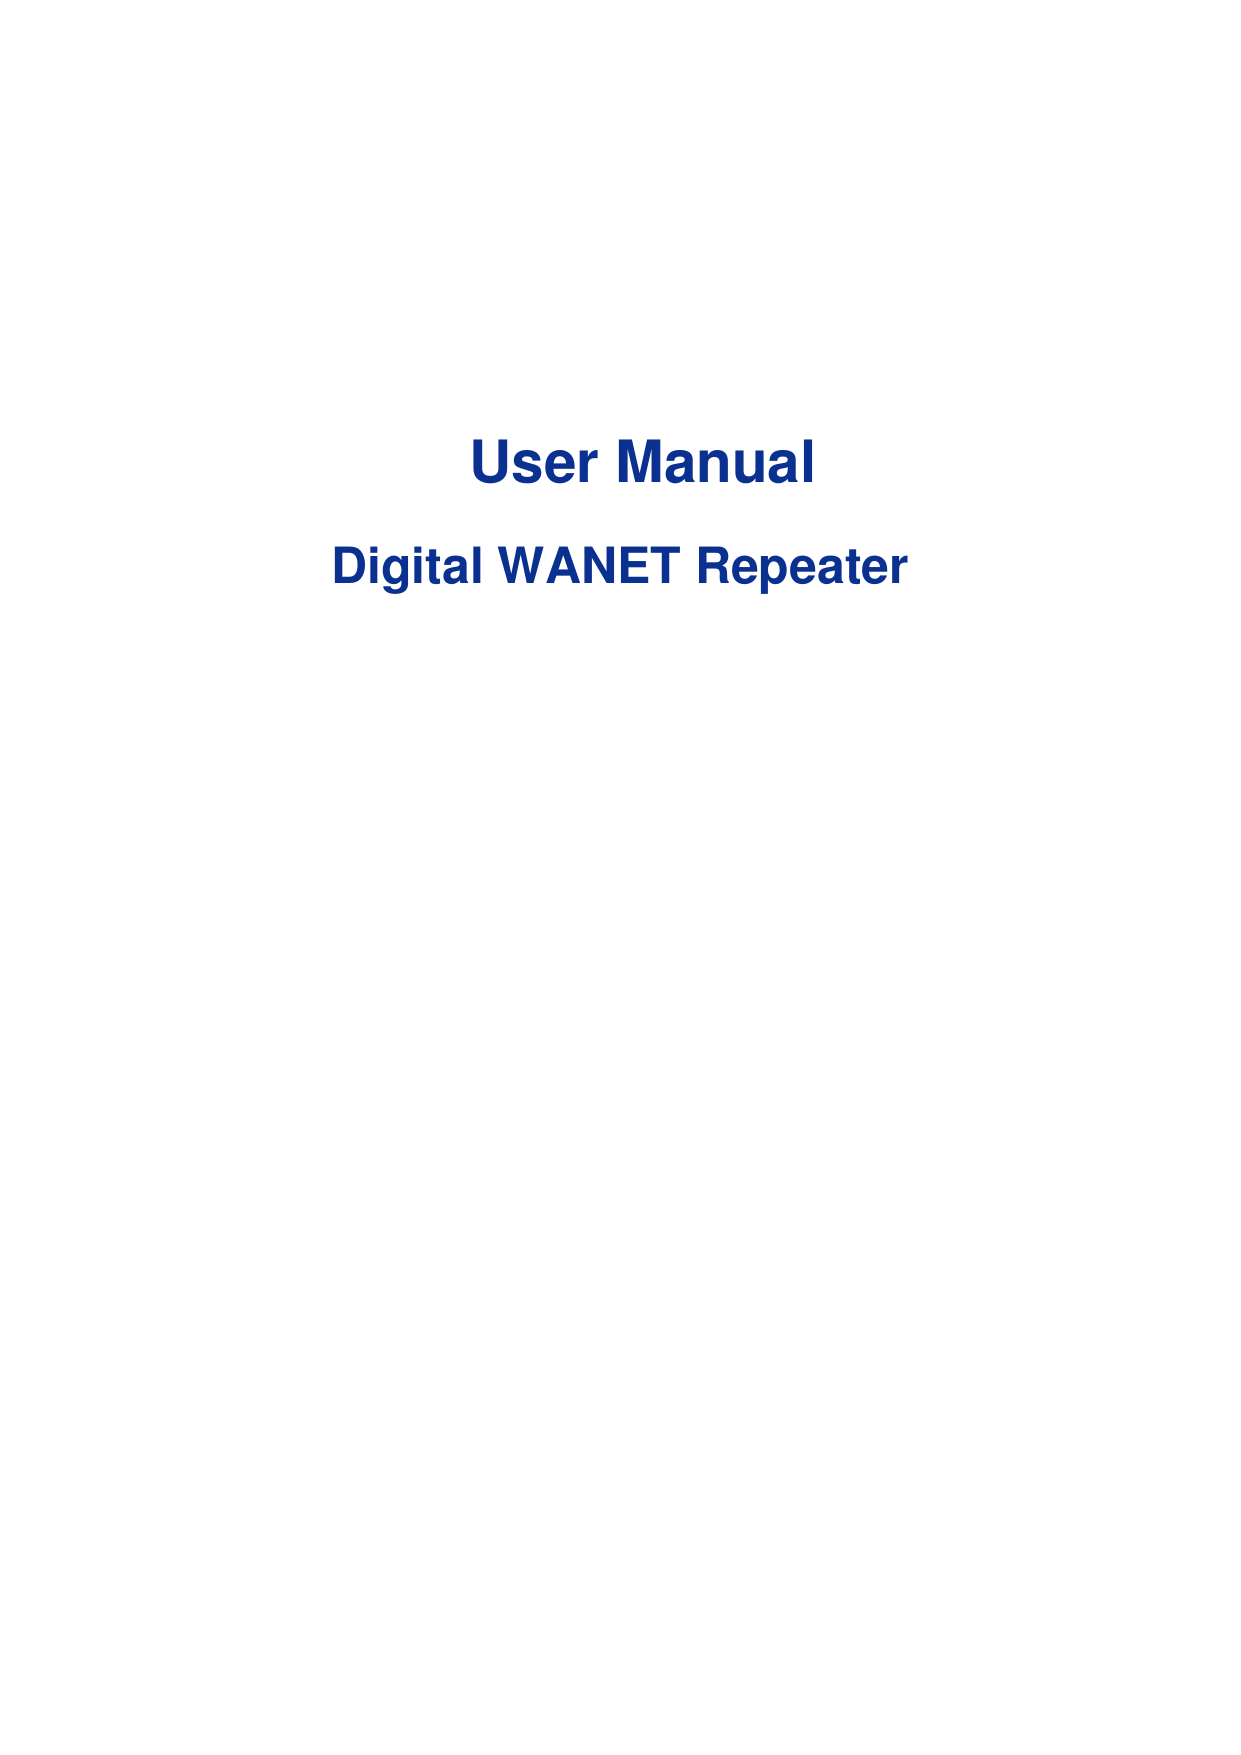                User Manual  Digital WANET Repeater                     